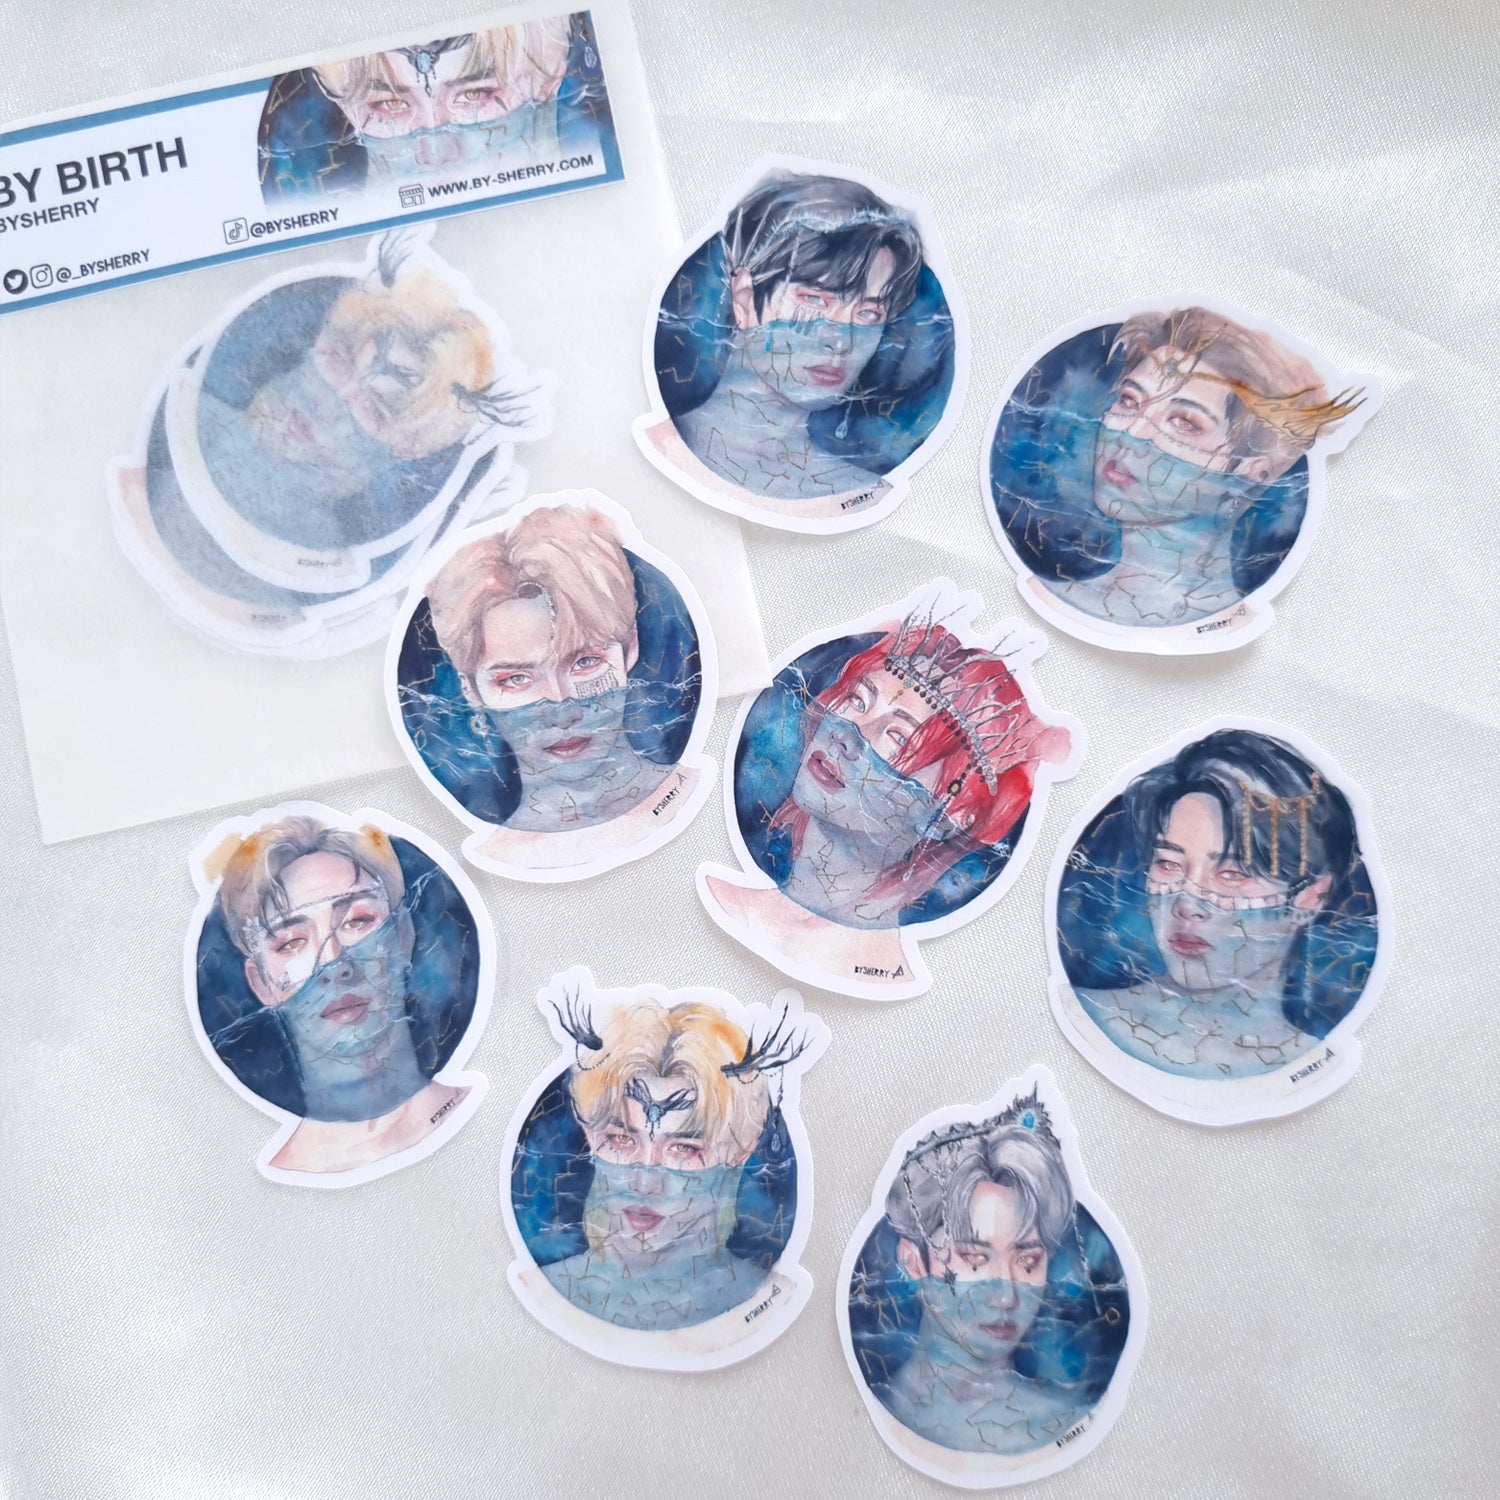 STRAY KIDS "BY BIRTH" Sticker Pack - Set of 8